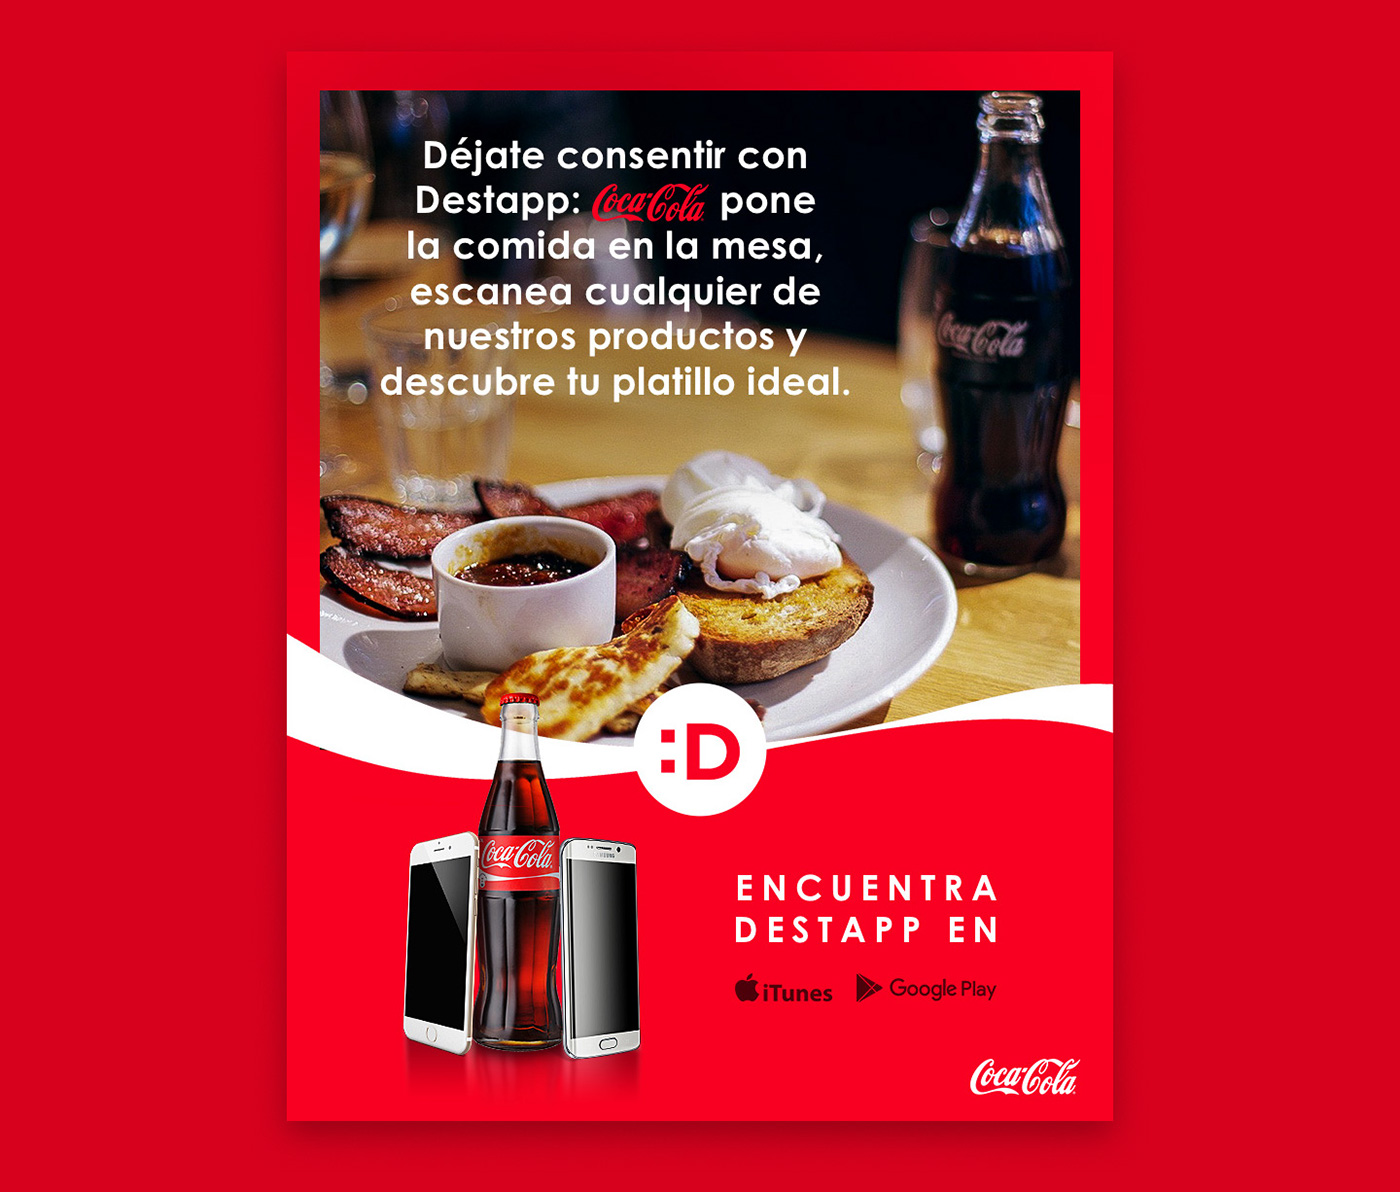 Coca-Cola destapp poster mobile app ios android